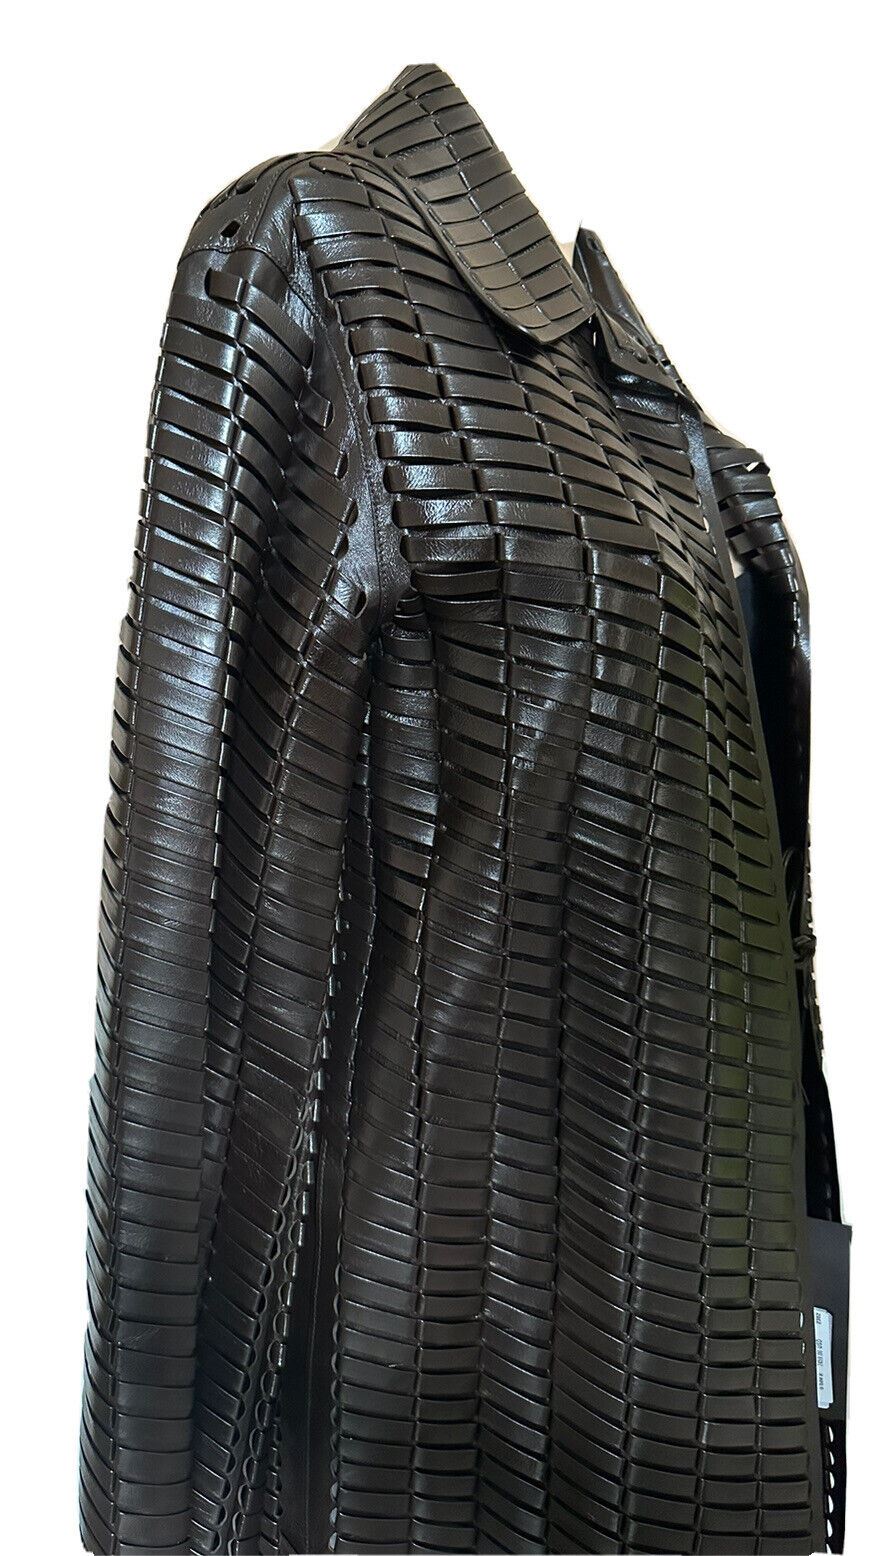 NWT $14900 Bottega Veneta Women's Woven Shiny Leather Coat Chocolate 36R 618482